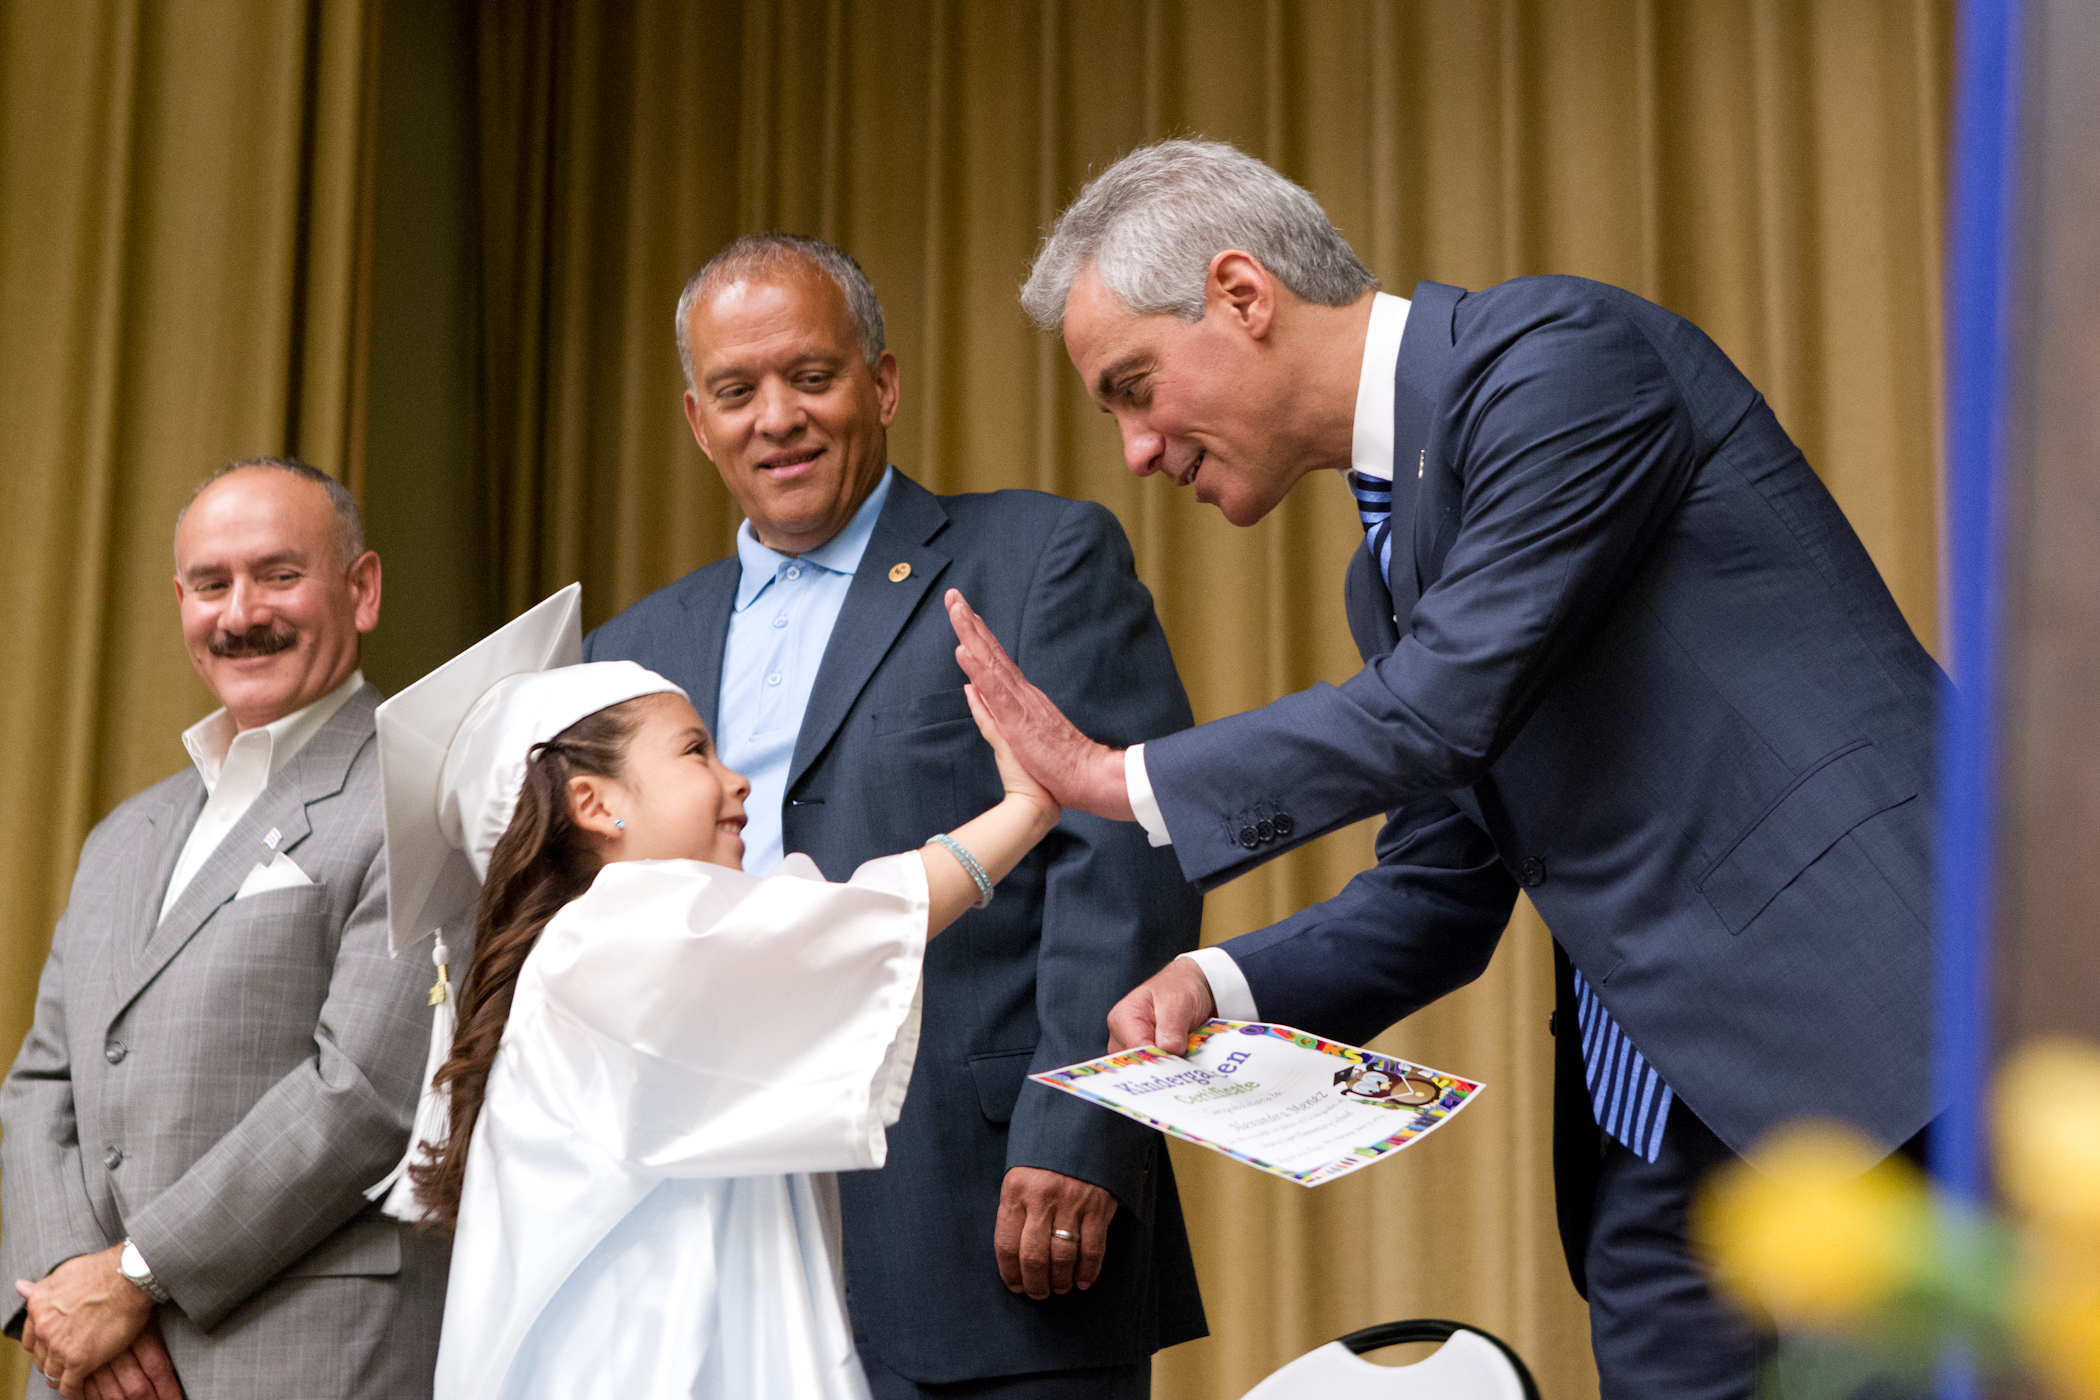 Mayor Emanuel congratulates kindergarten students during end-of-year celebration